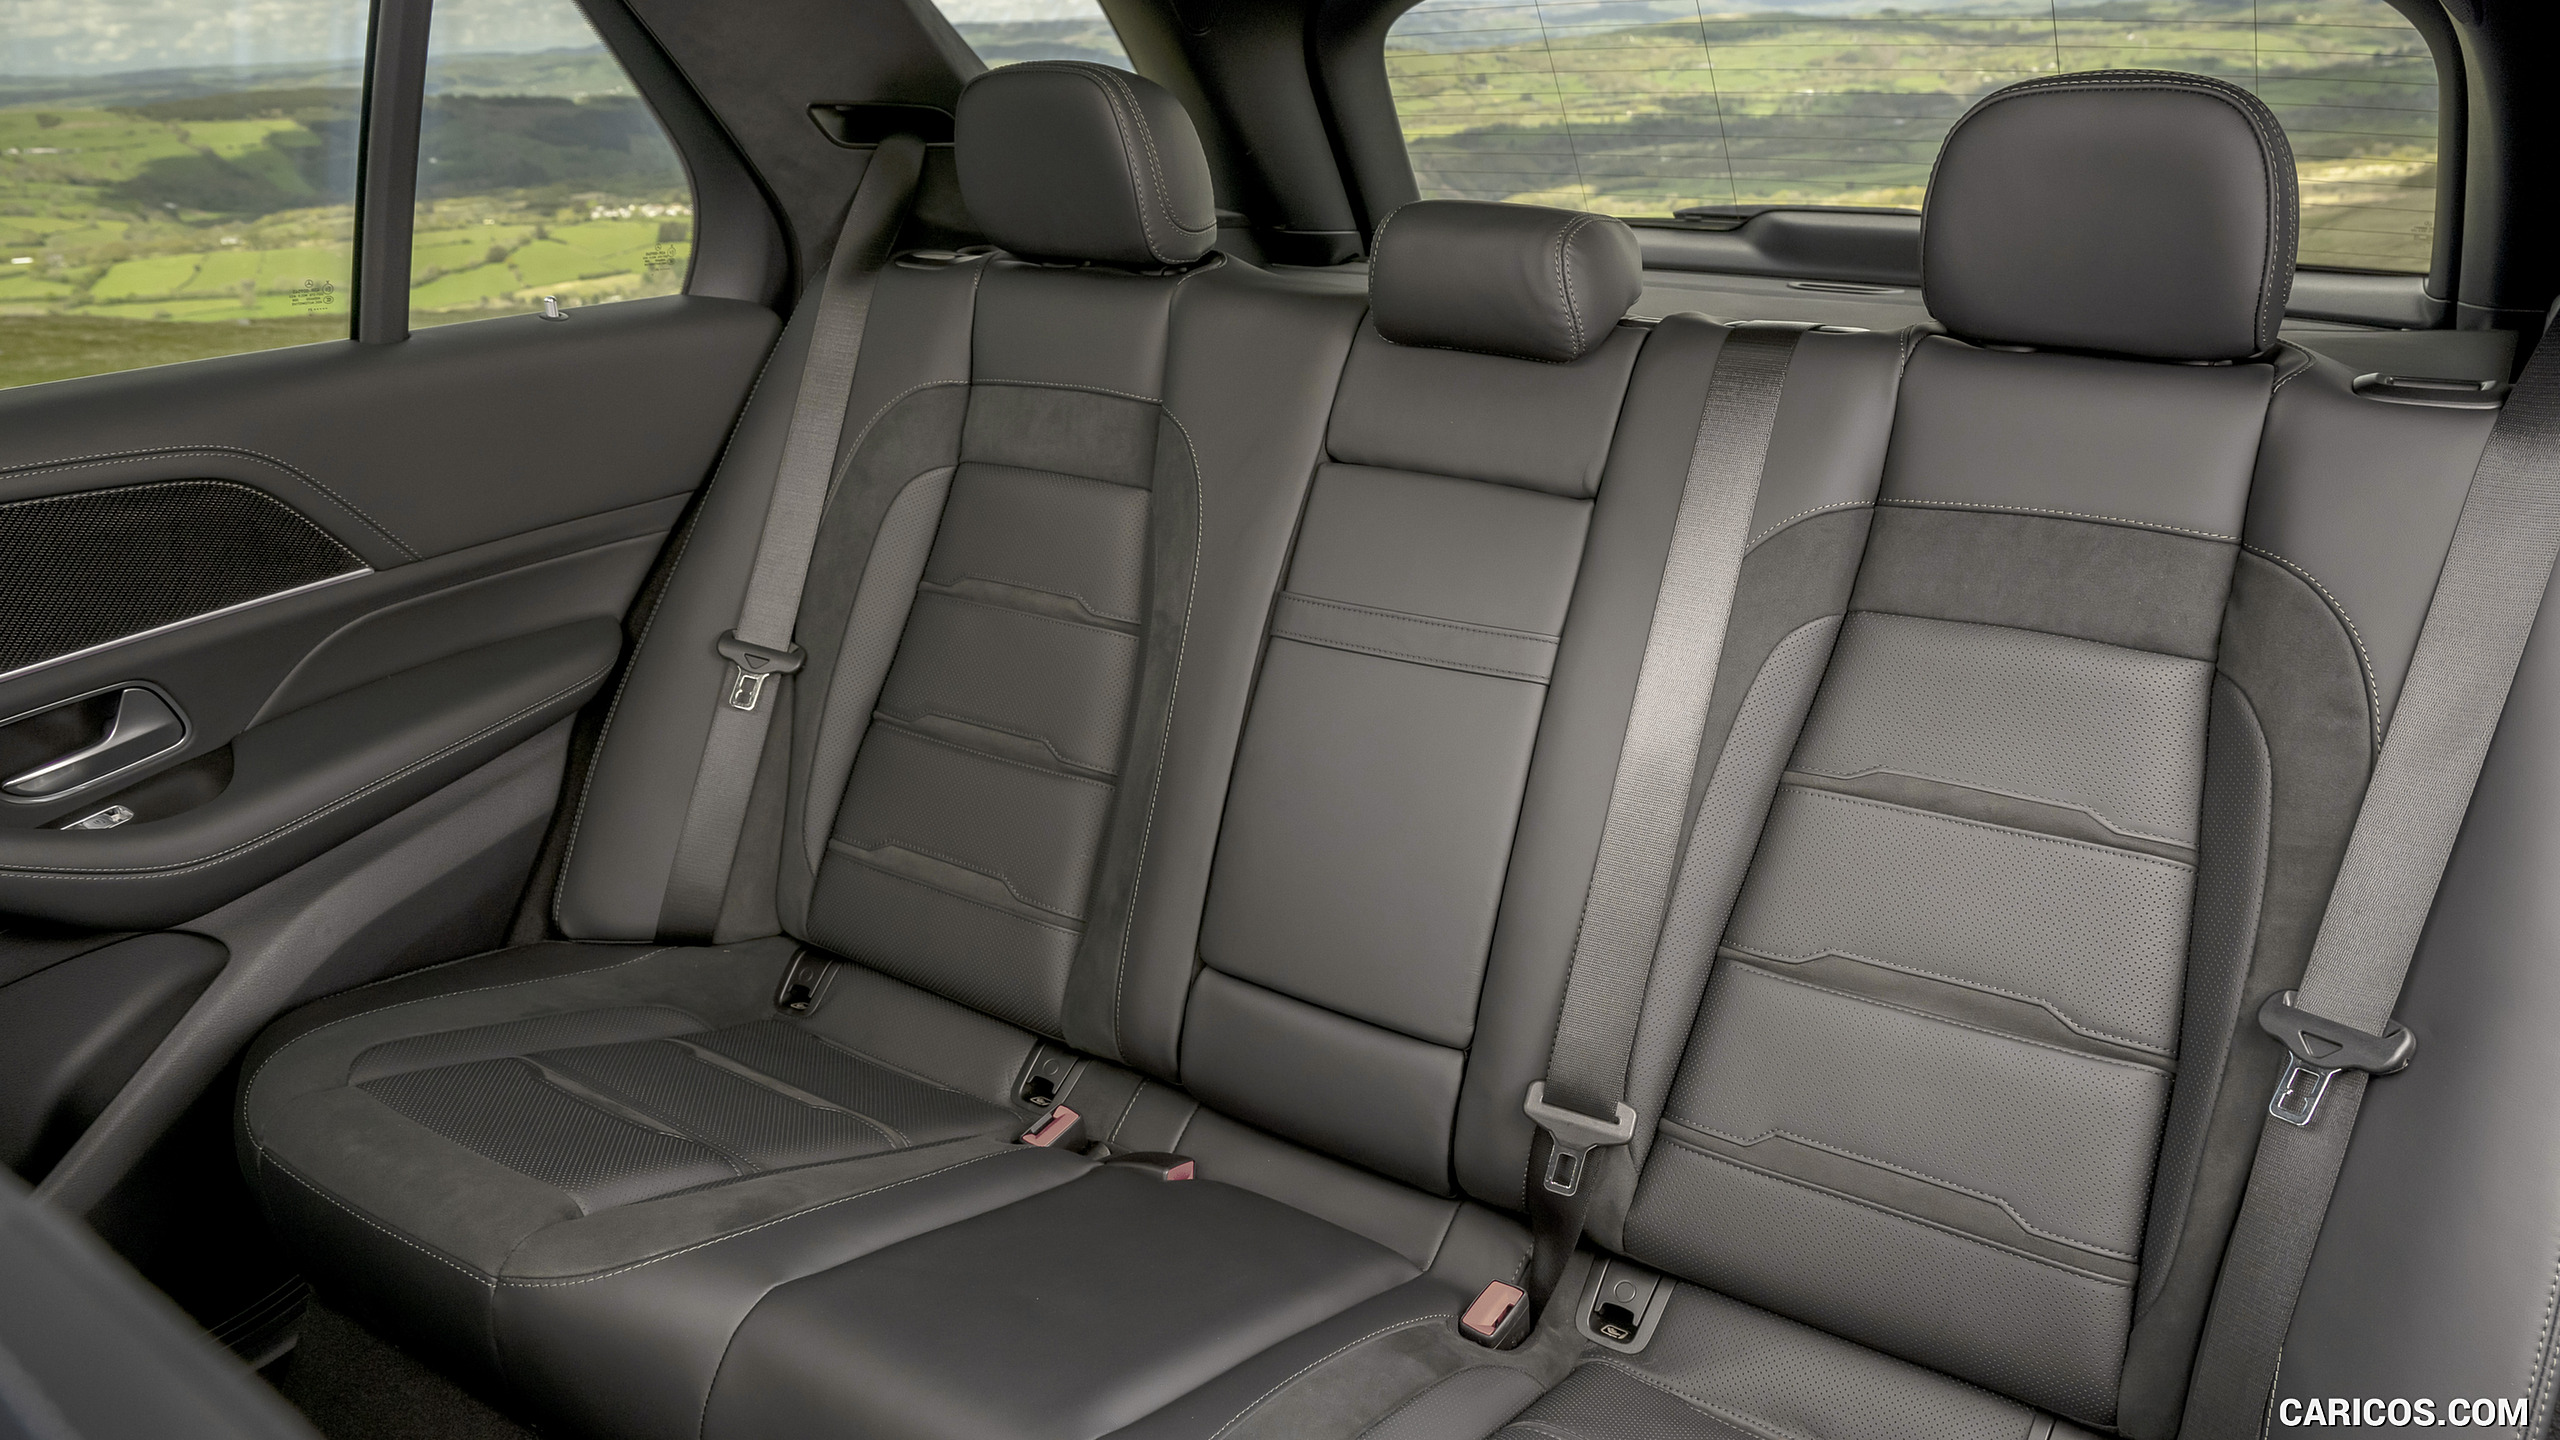 2021 Mercedes-AMG GLE 63 S 4MATIC (UK-Spec) - Interior, Rear Seats, #179 of 187